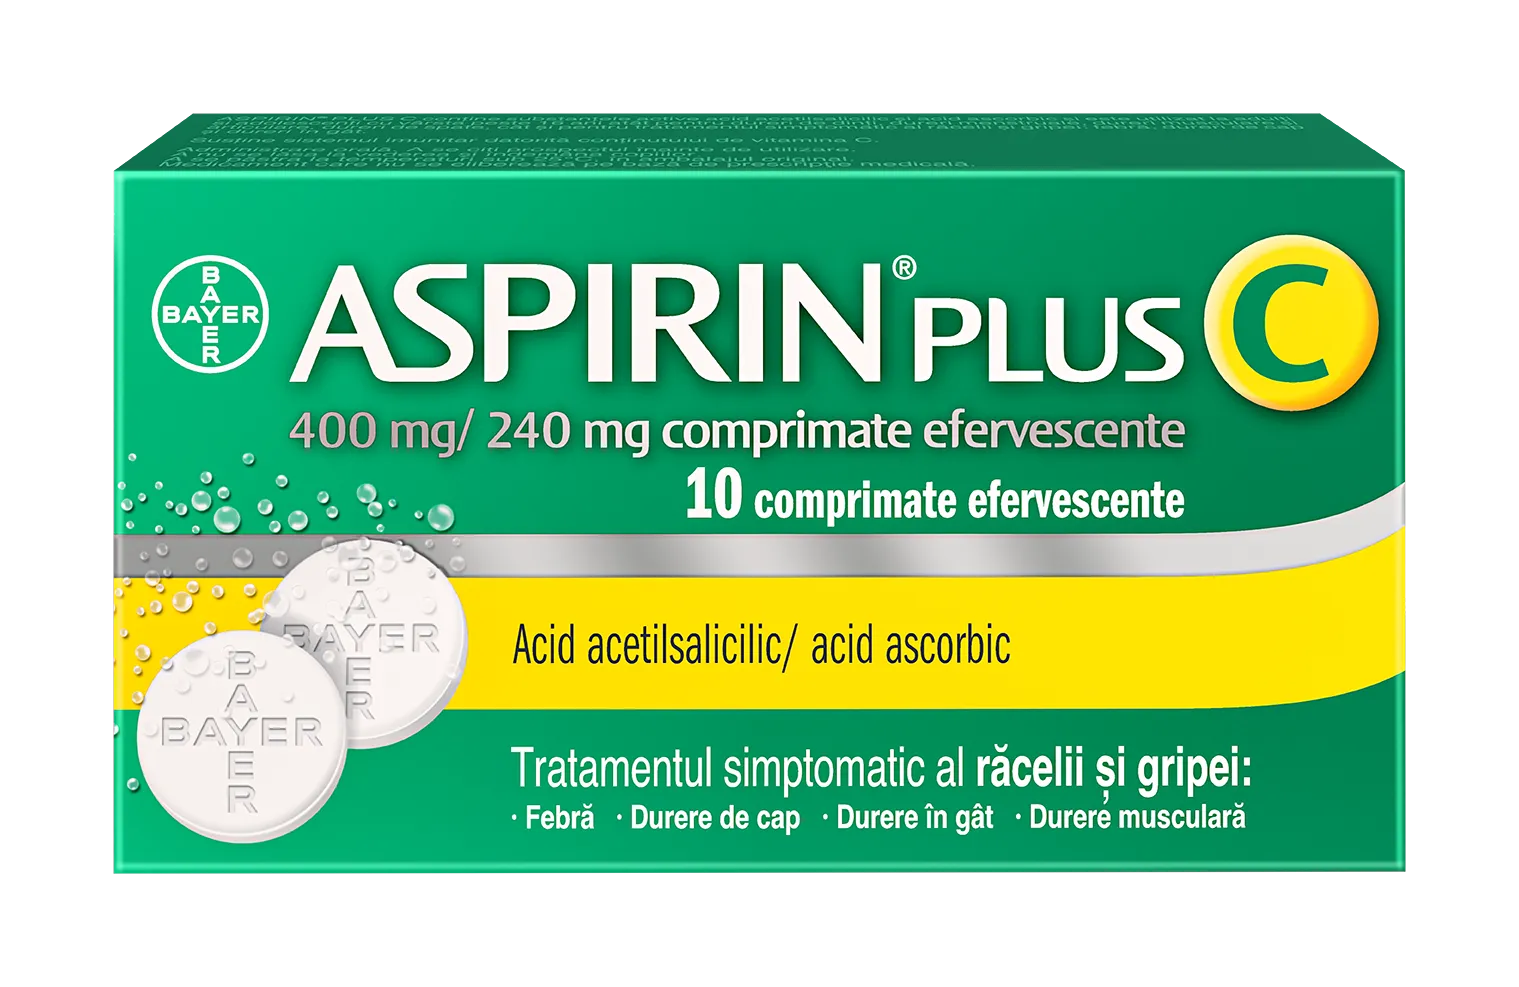 Aspirin Plus C, 10 comprimate efervescente, Bayer 